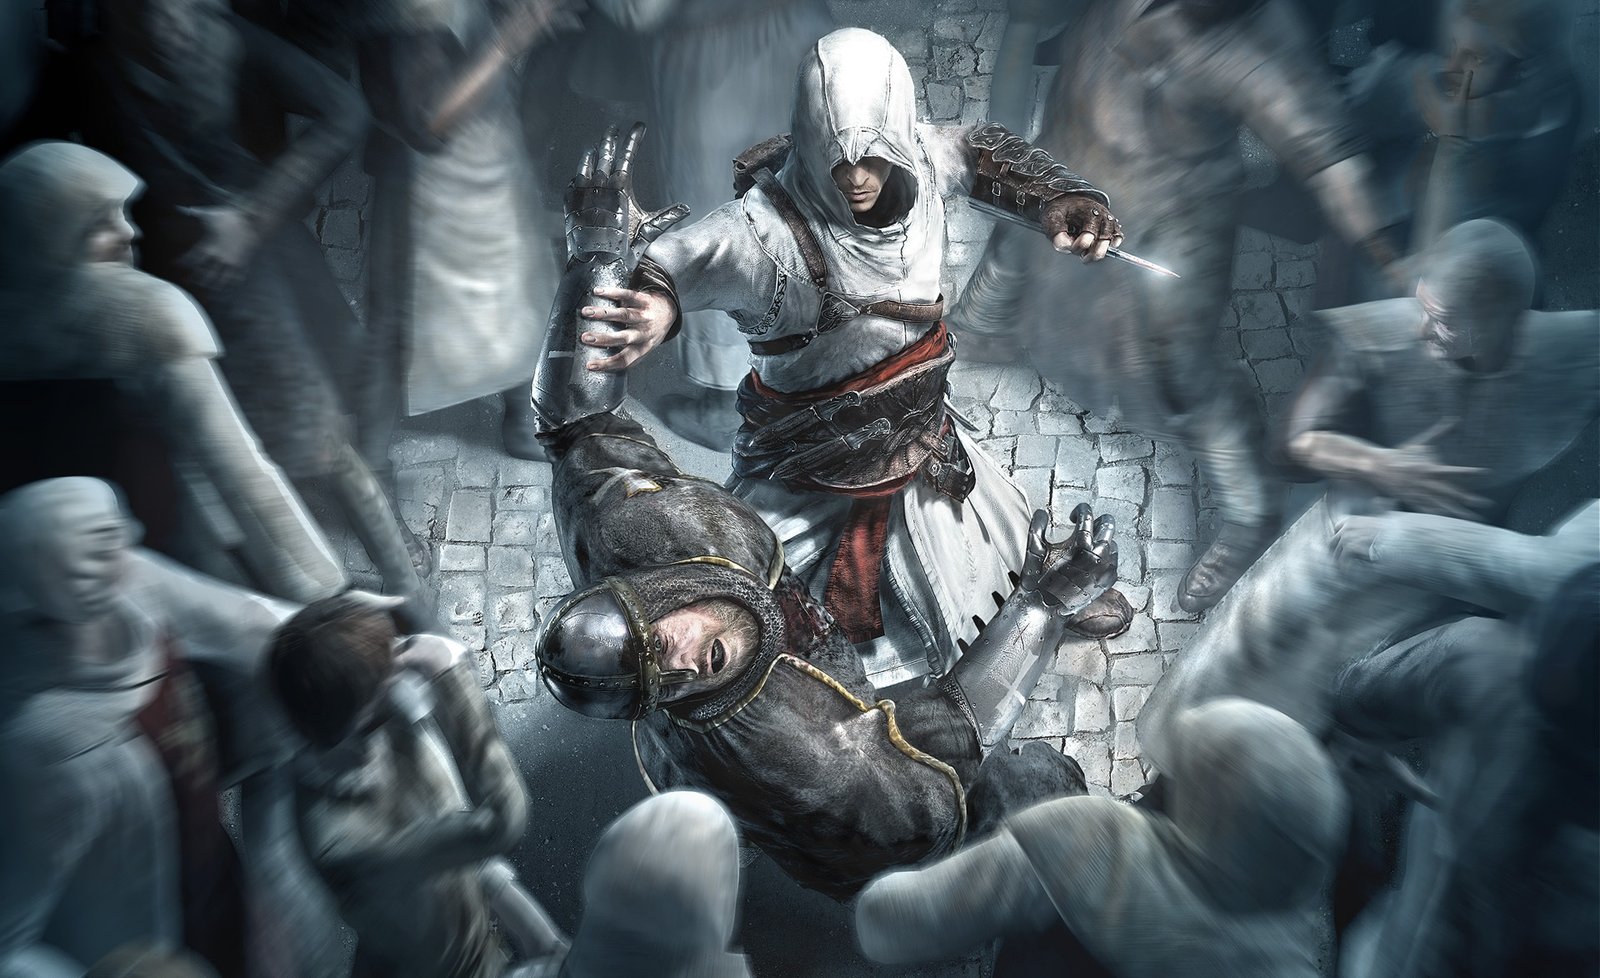 Confira os requisitos mínimos e recomendados para rodar Assassin's Creed  Syndicate - Tribo Gamer